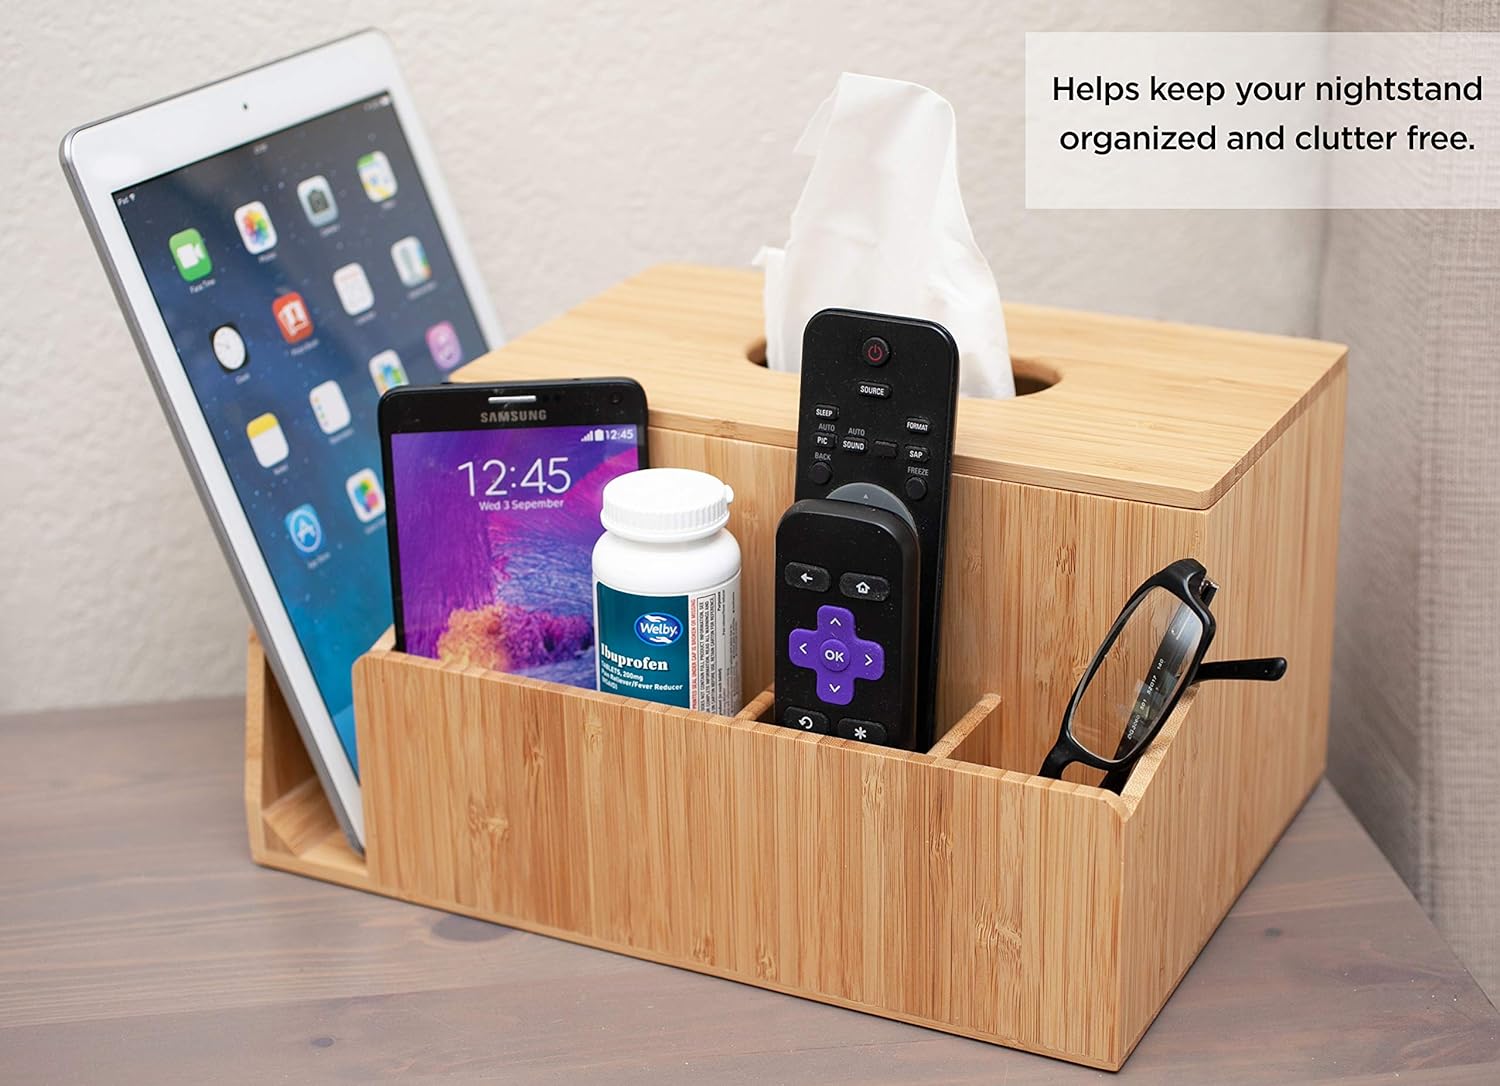 Bamboo Tissue Box Holder & Tablet Stand Organizer for Bedroom & Desktop